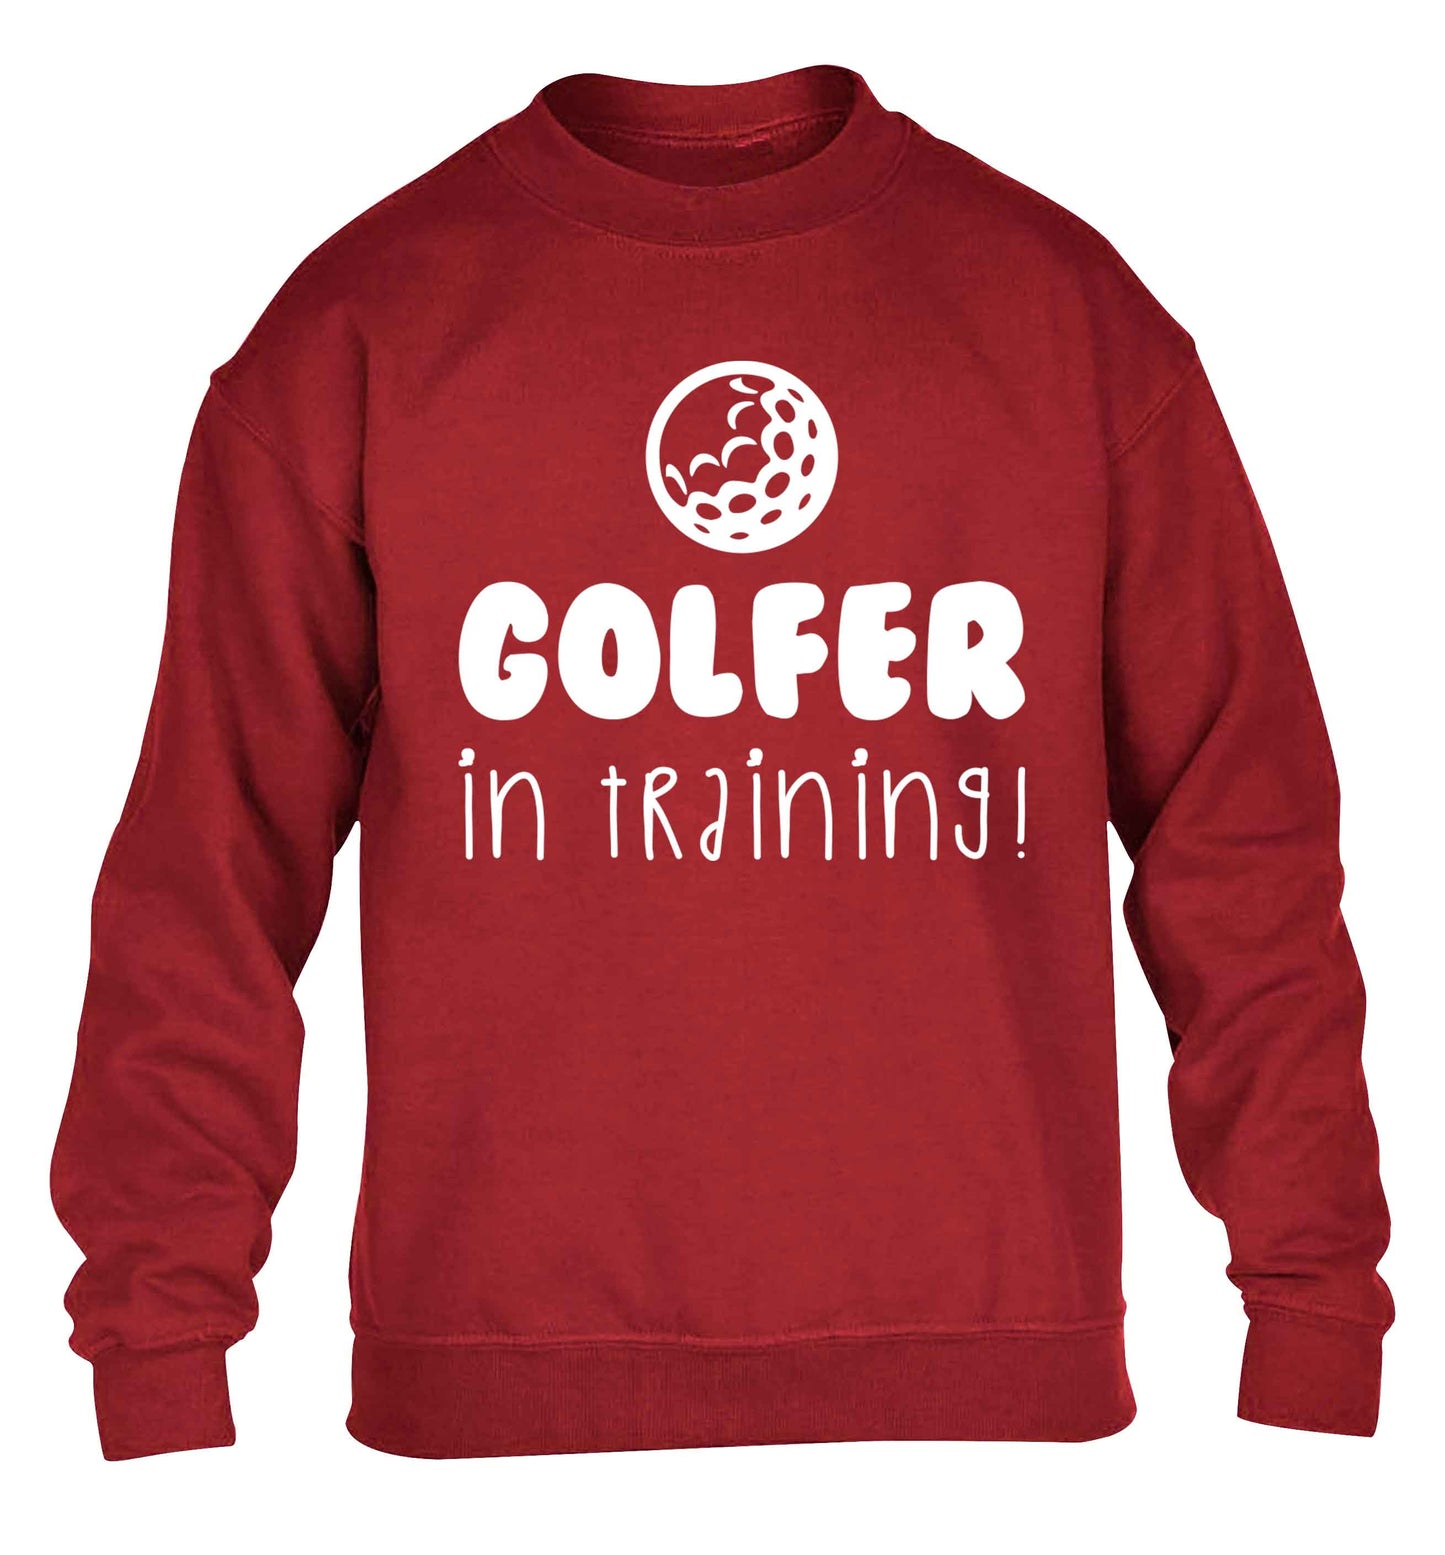 Golfer in training children's grey sweater 12-13 Years